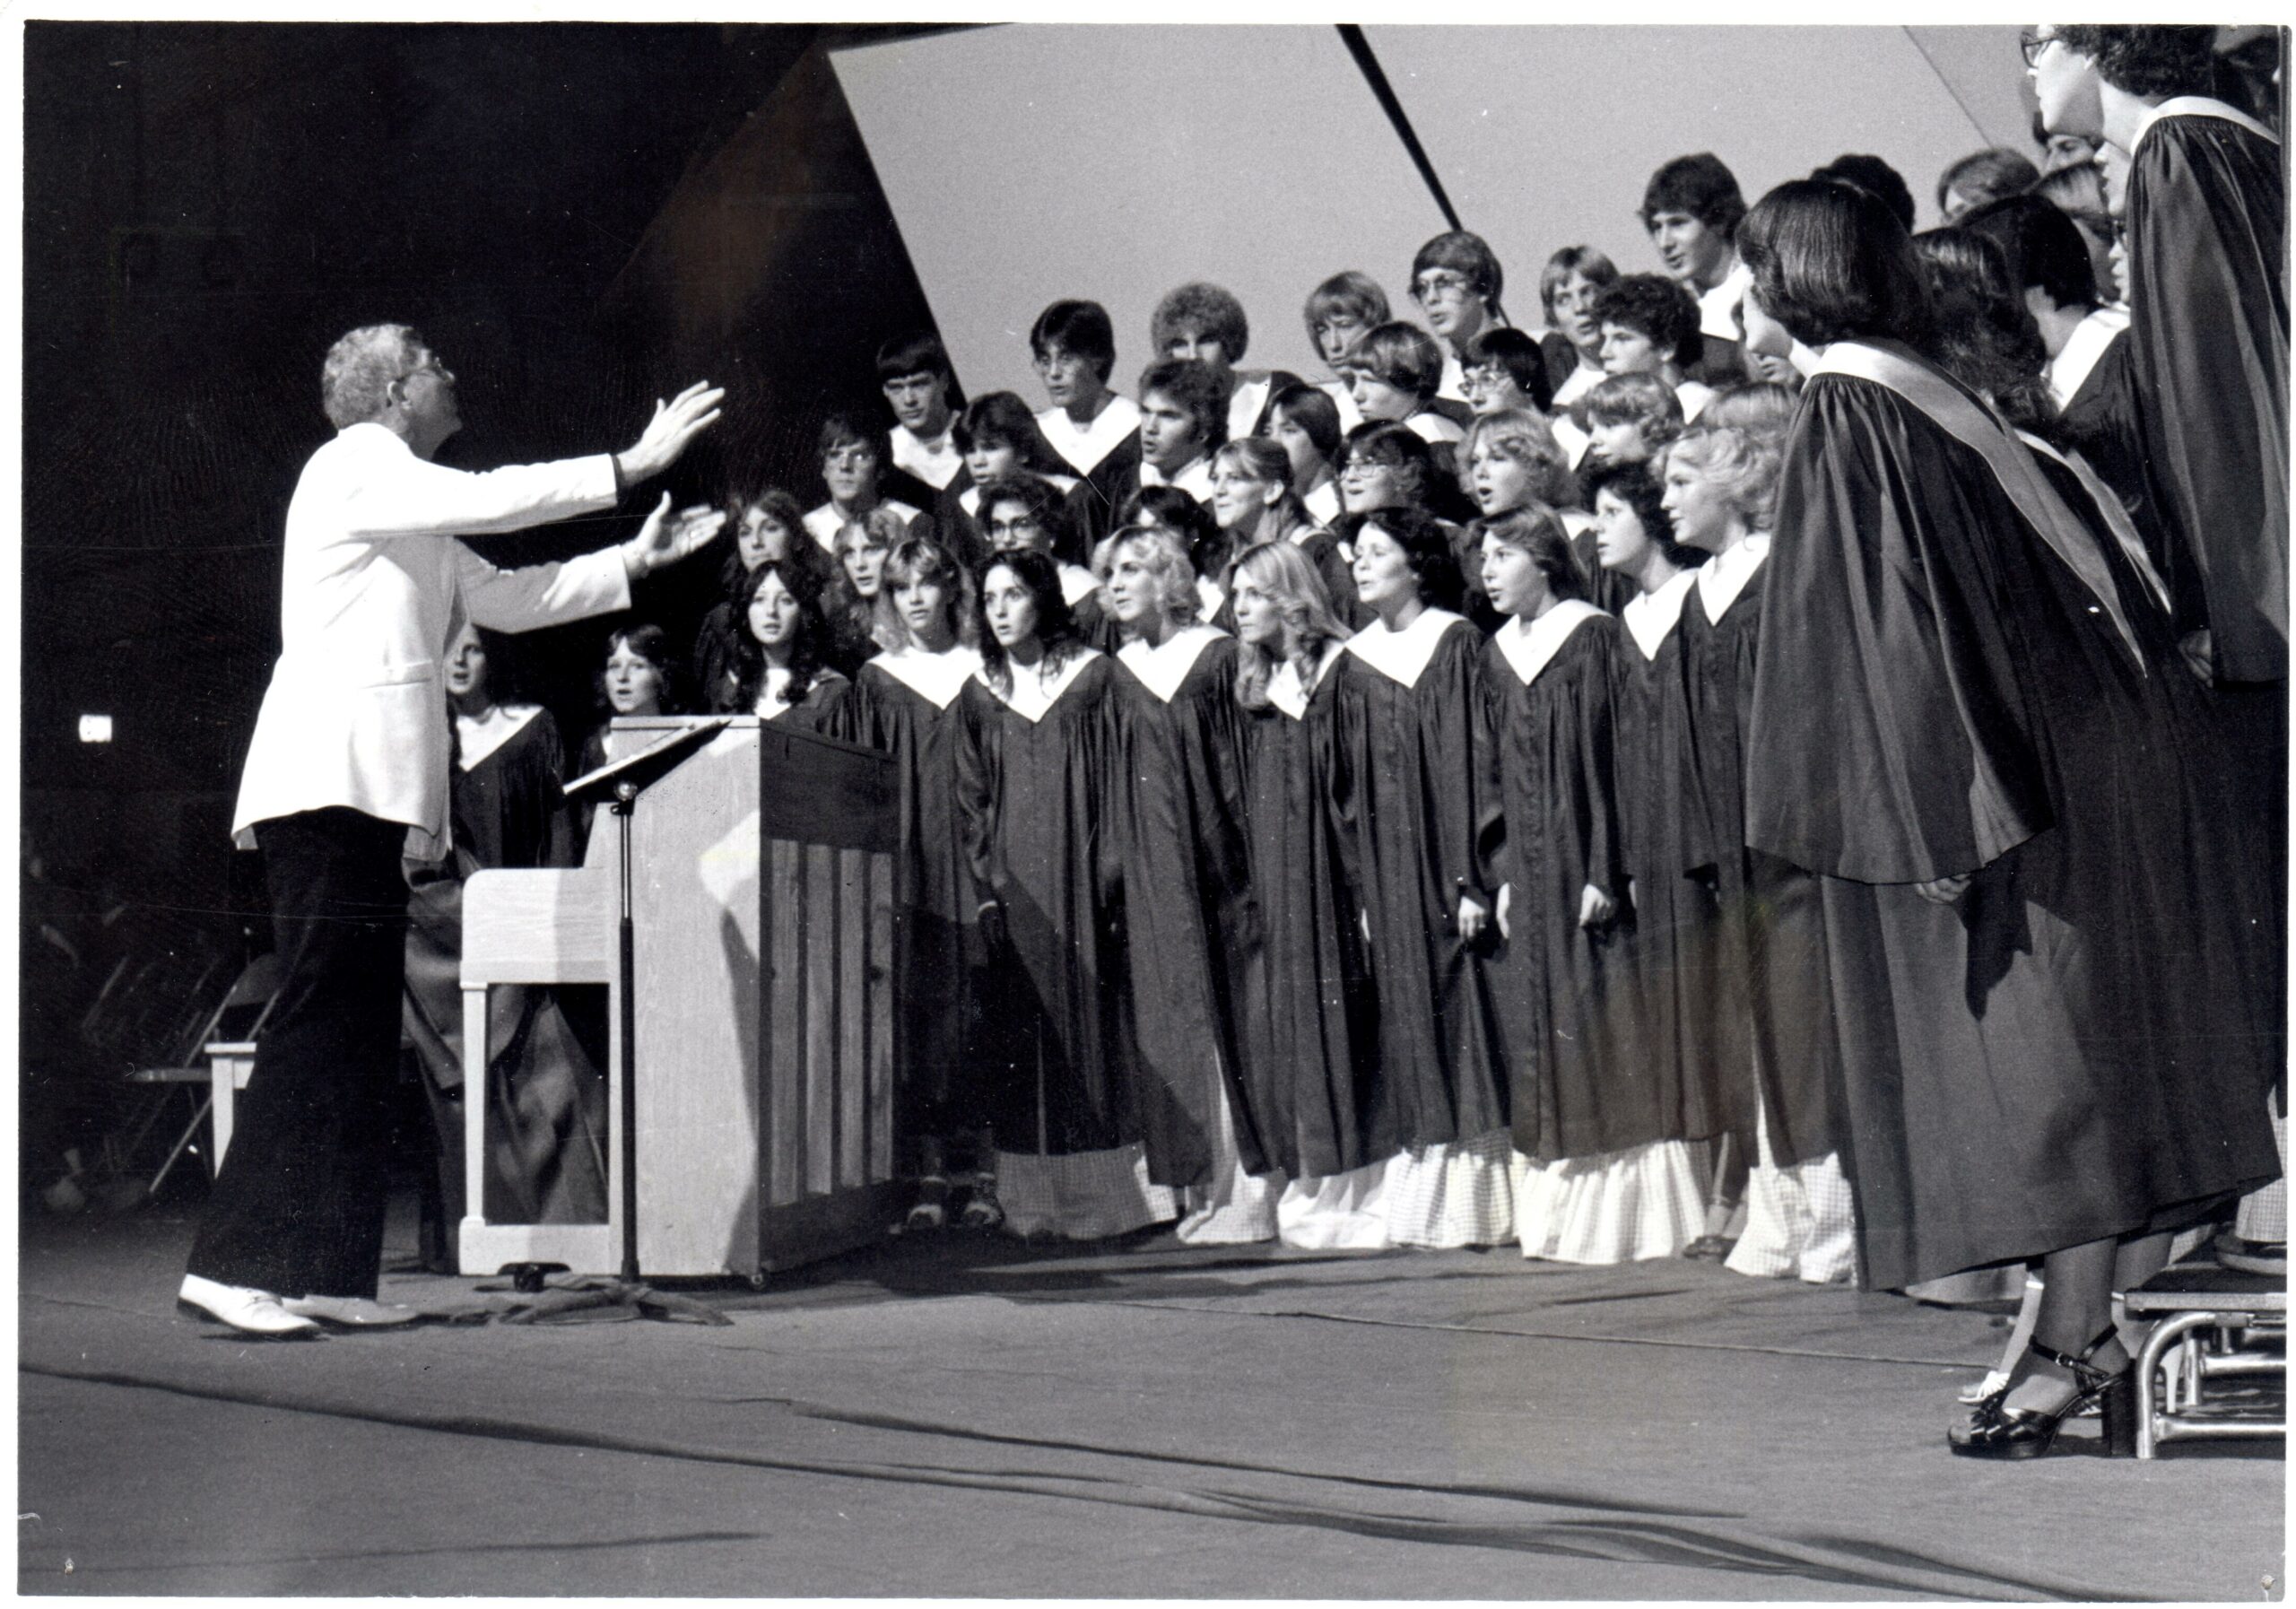 Ed Sands directing the Choir